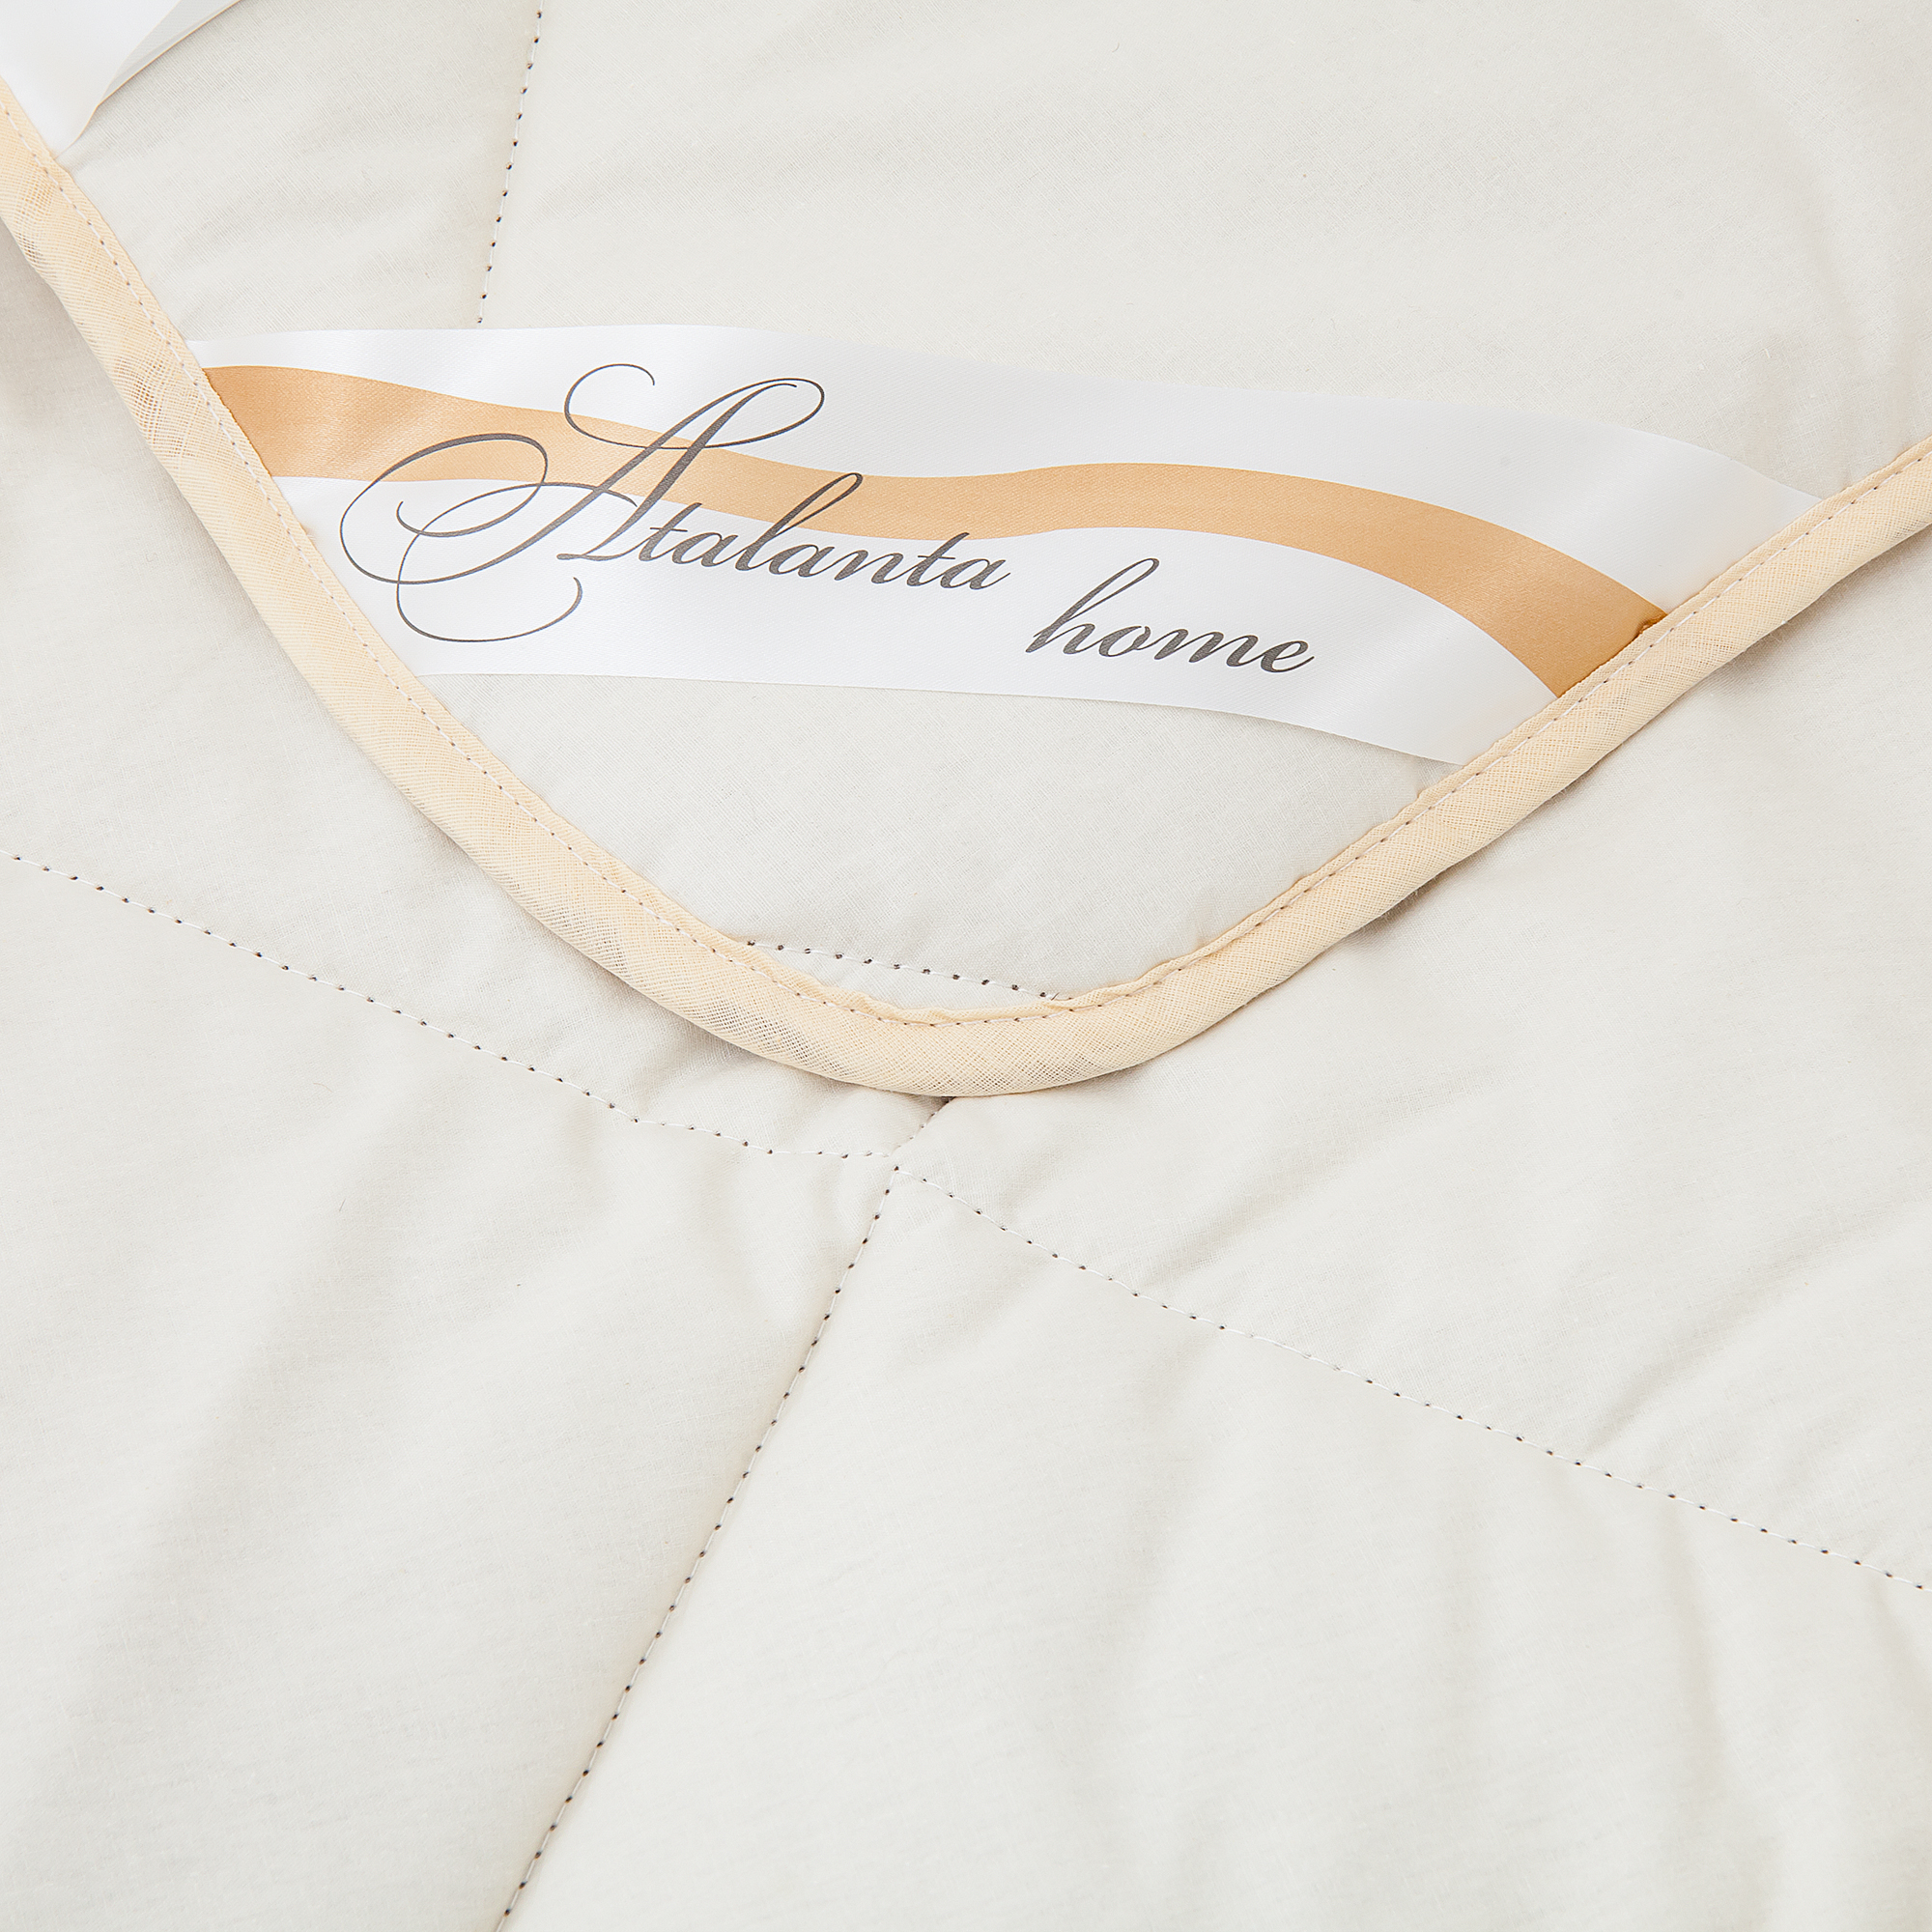 Одеяло Atalanta (ОАВ -200), цвет светло-коричневый, размер 200х210 см - фото 2